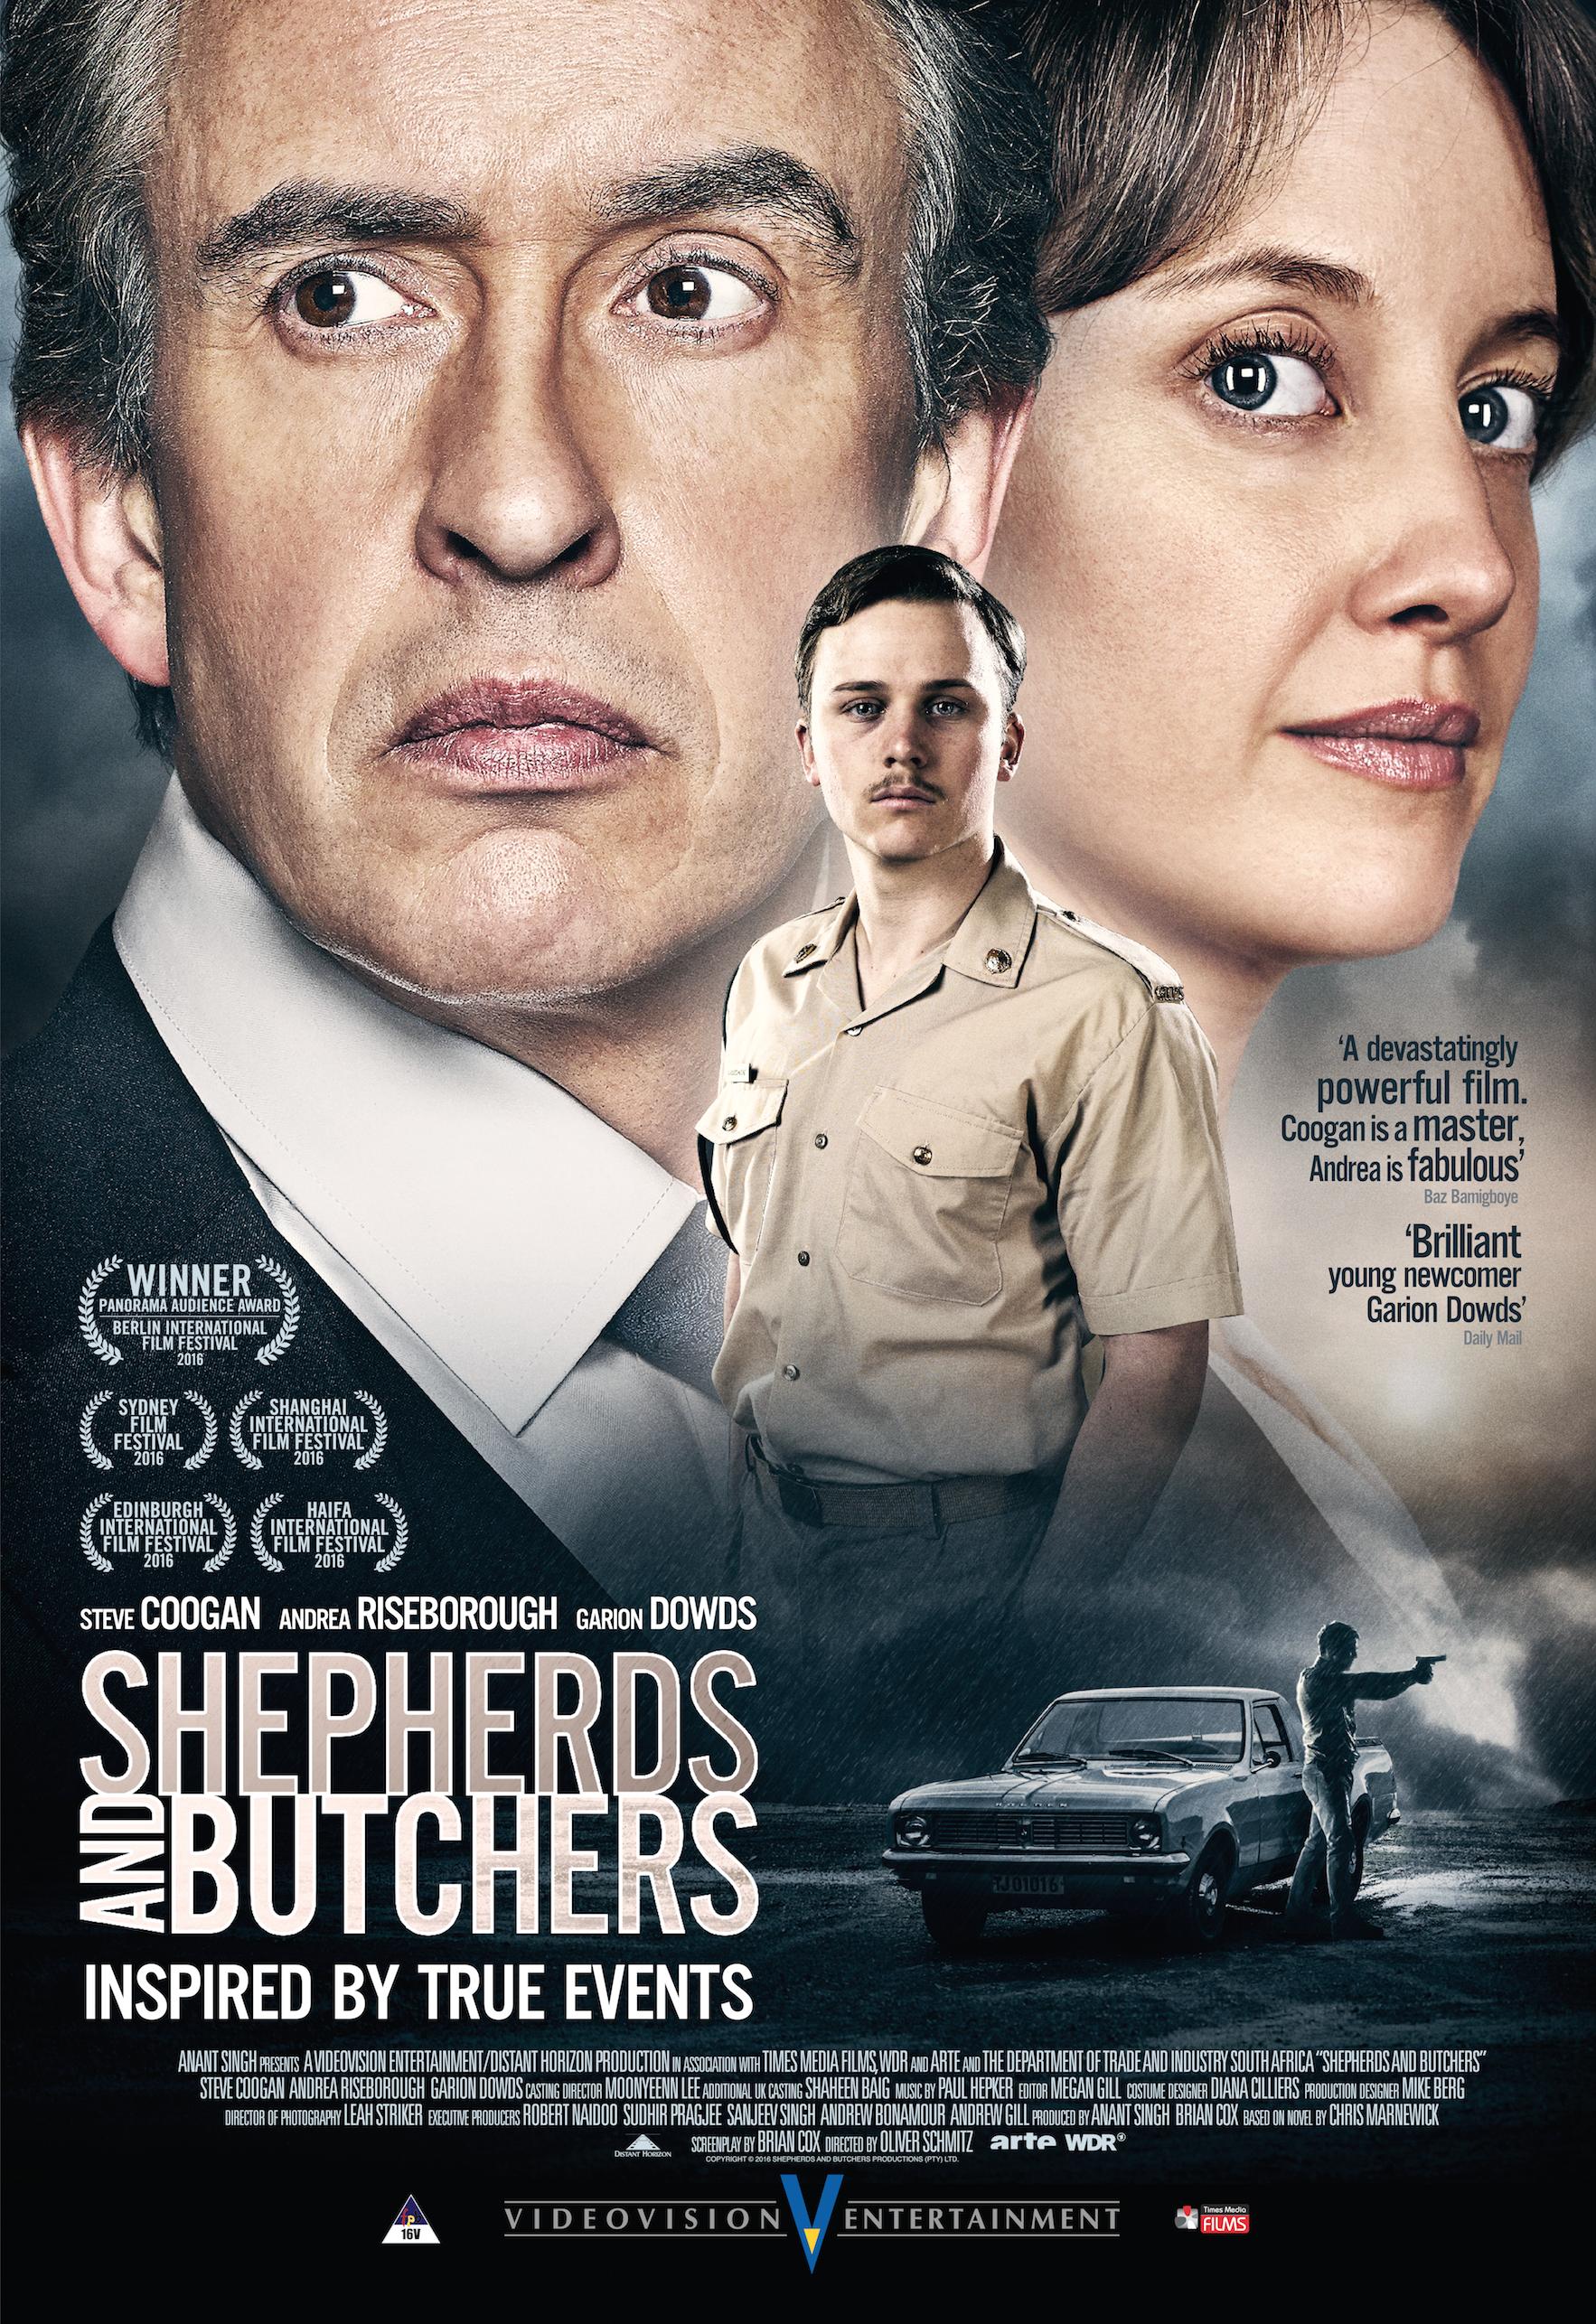 Nonton film Shepherds and Butchers layarkaca21 indoxx1 ganool online streaming terbaru